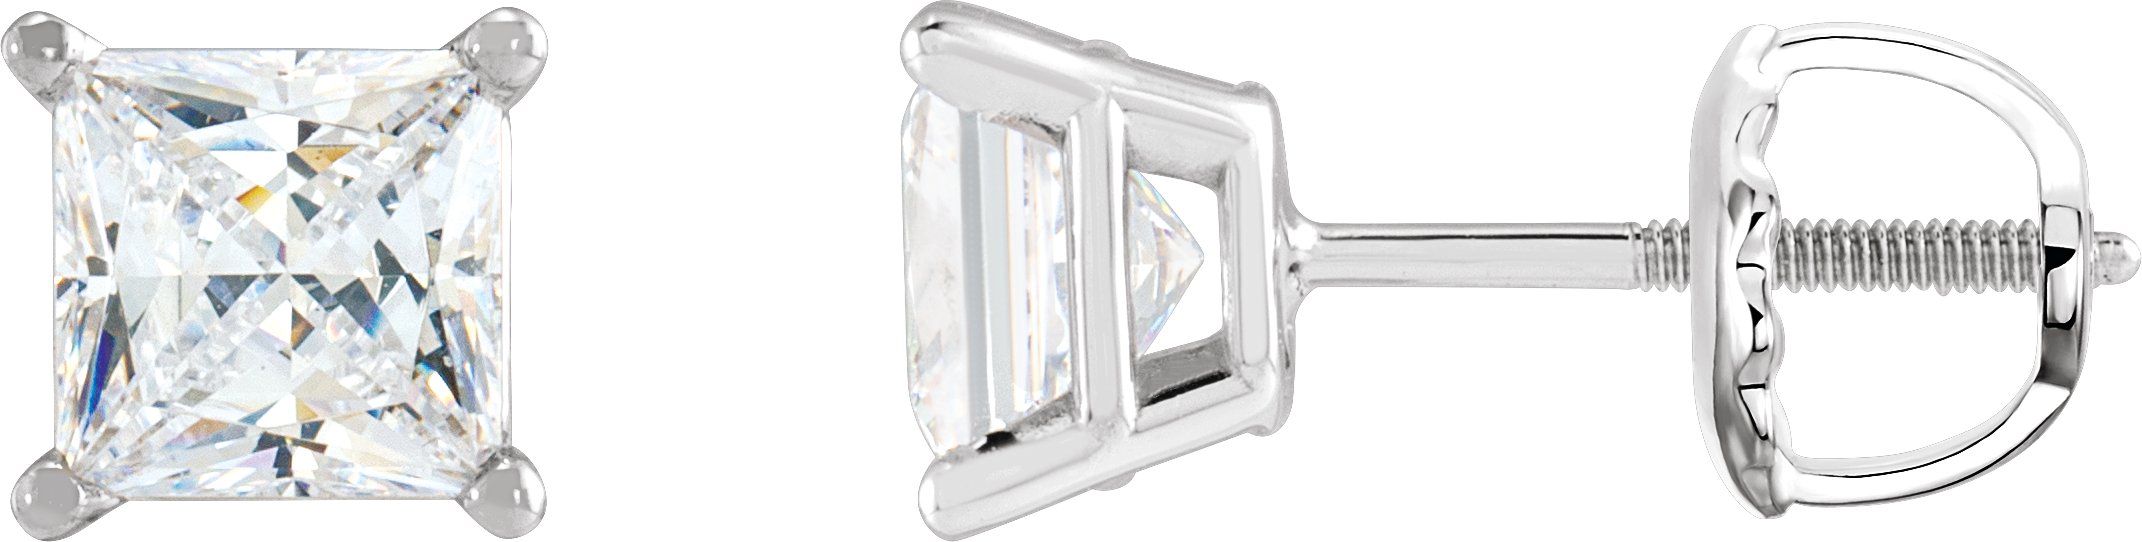 Platinum 1/10 CTW Natural Diamond Earrings